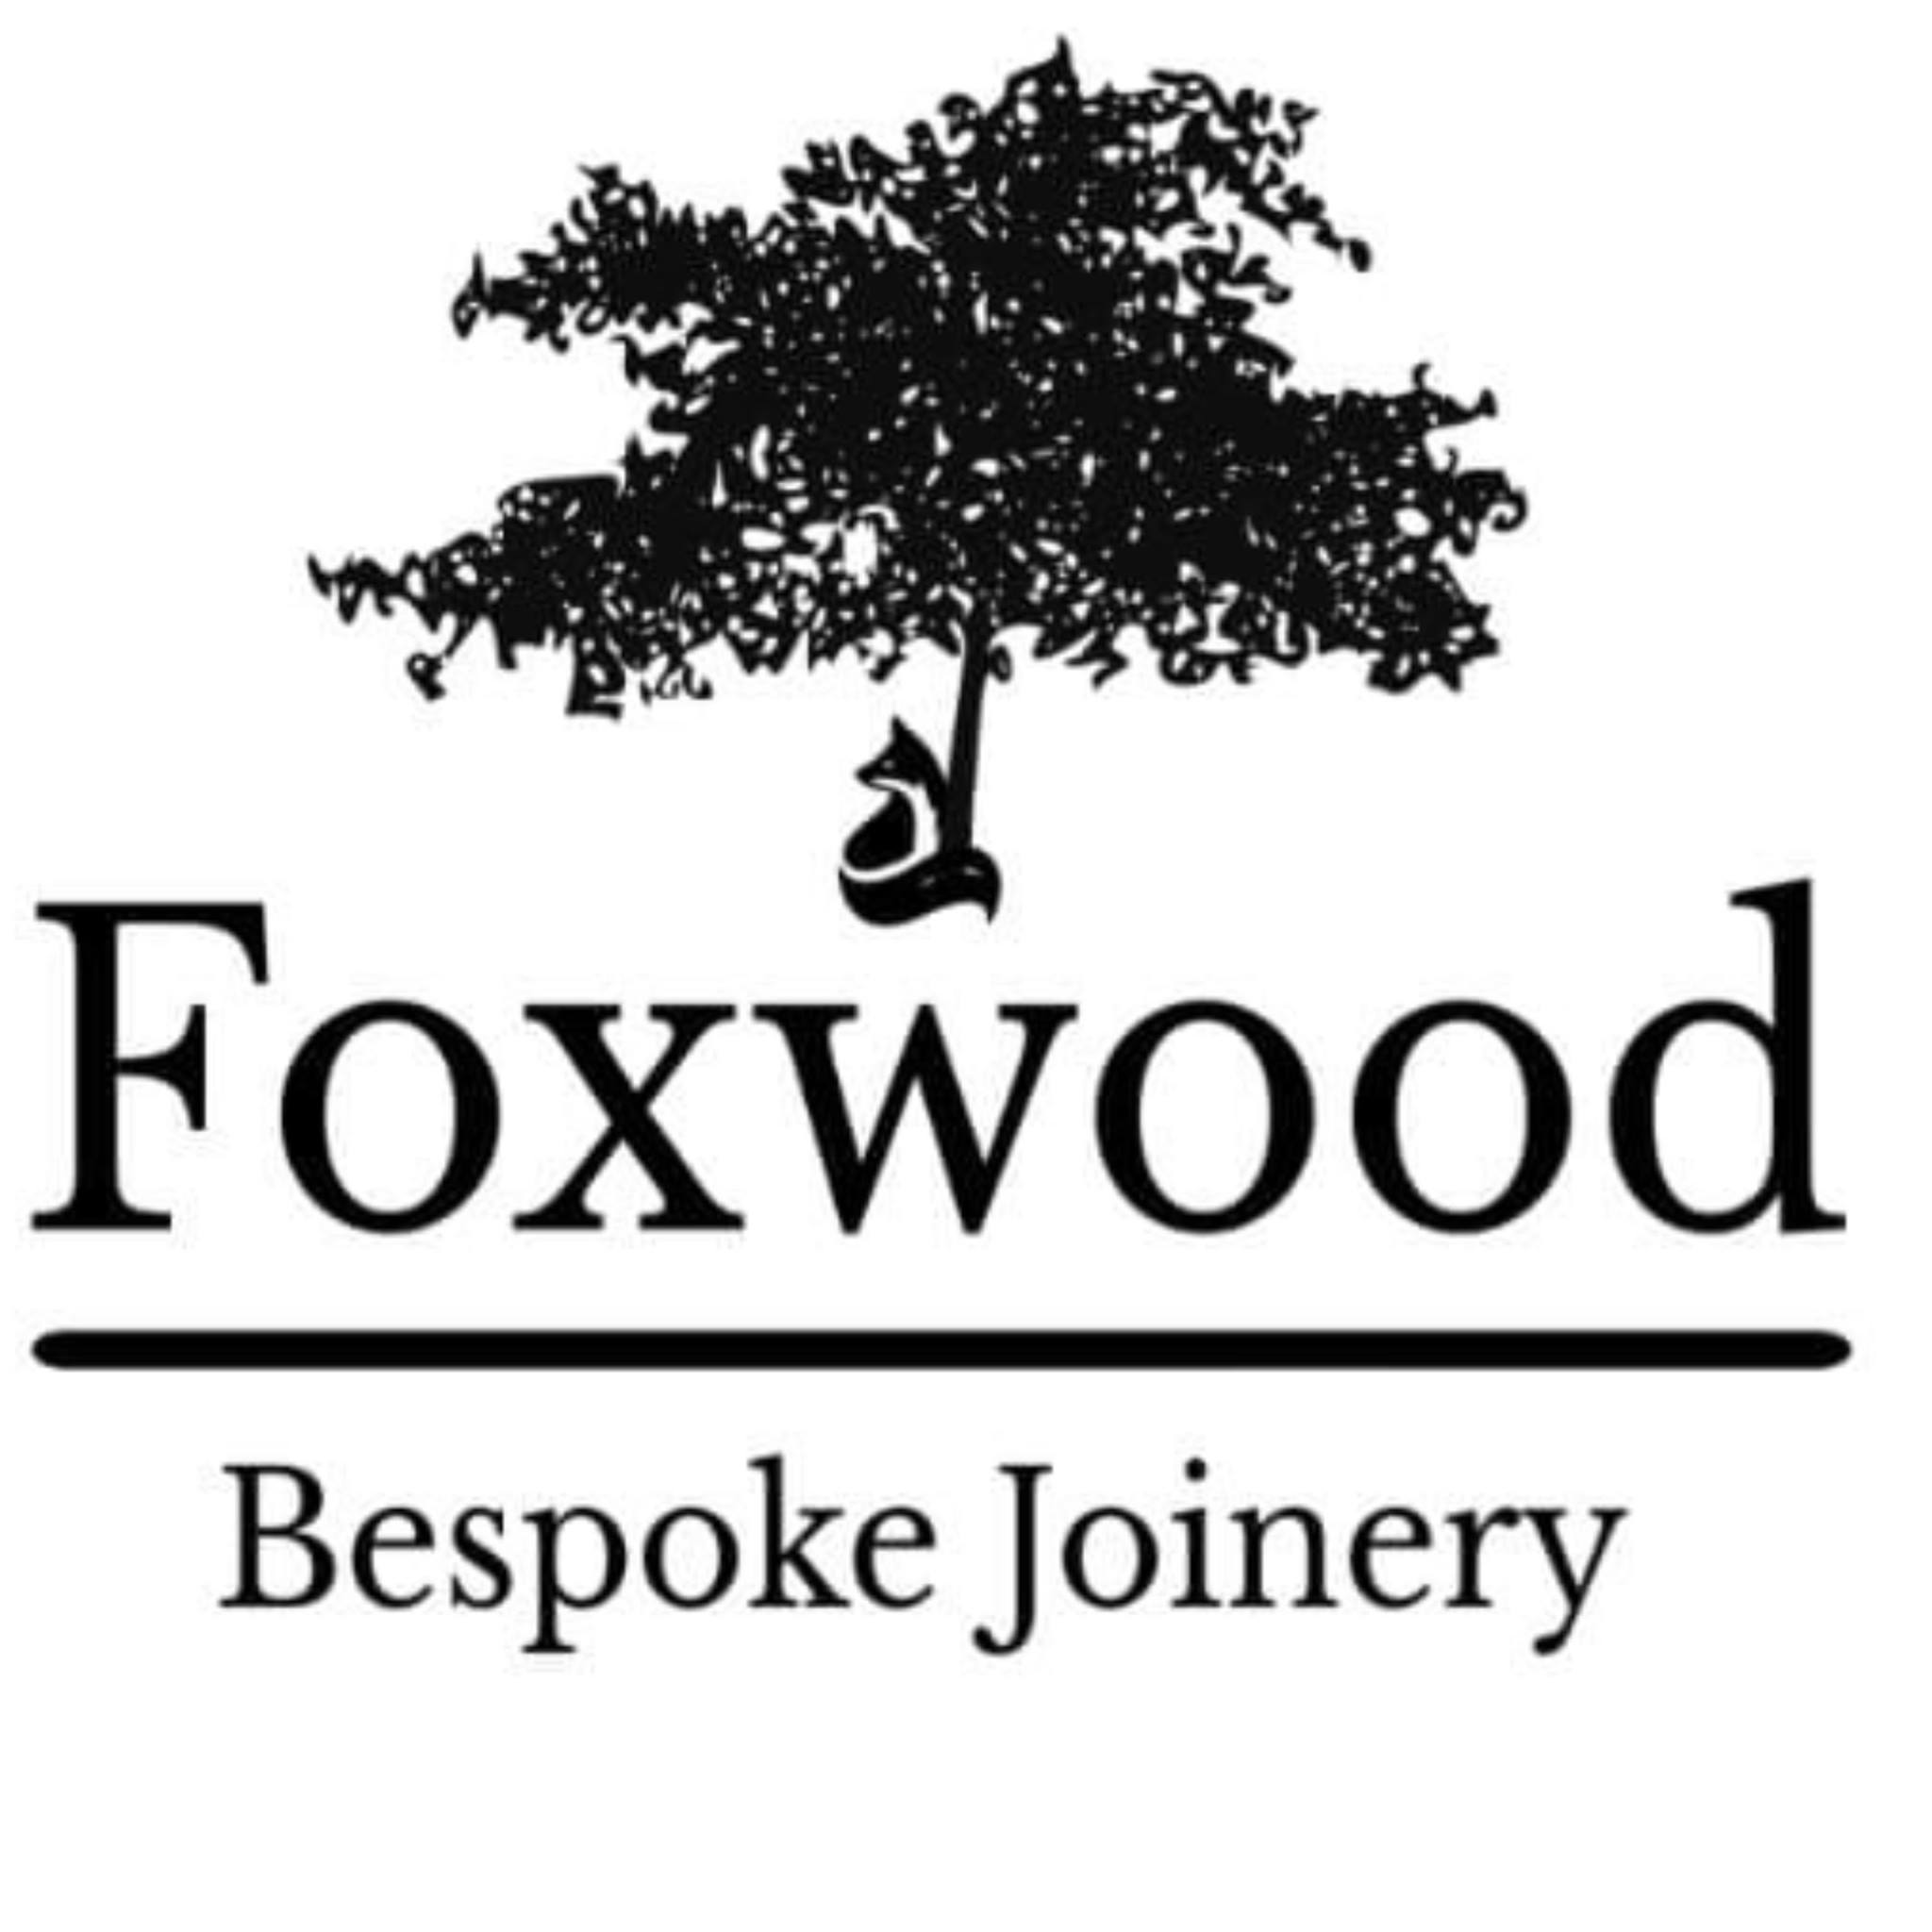 Foxwood Bespoke Joinery